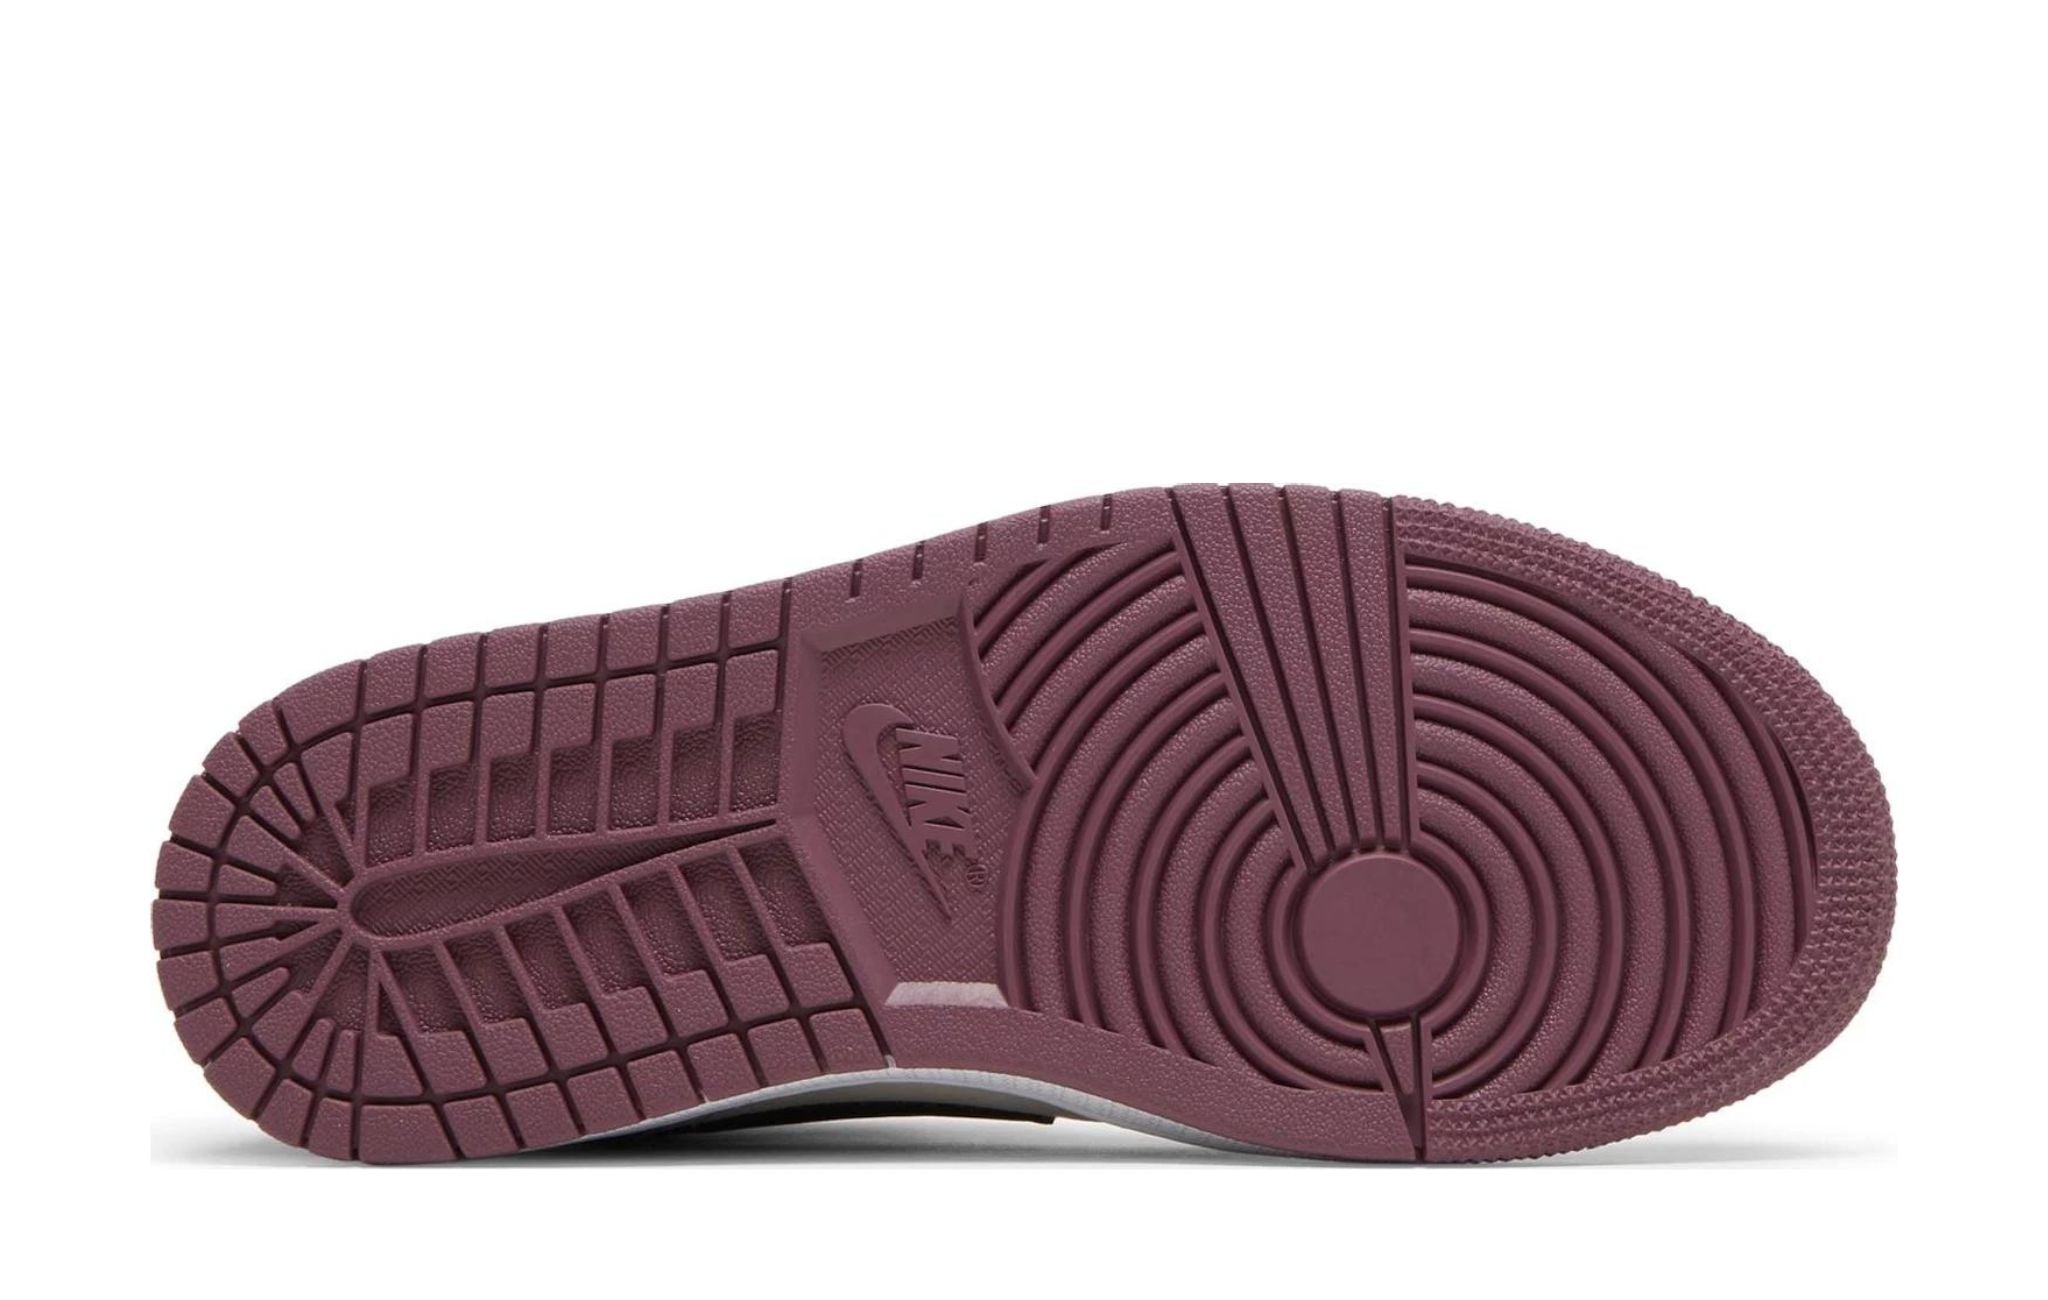 Nike Air Jordan 1 Mid SE Womens 'Berry Pink'